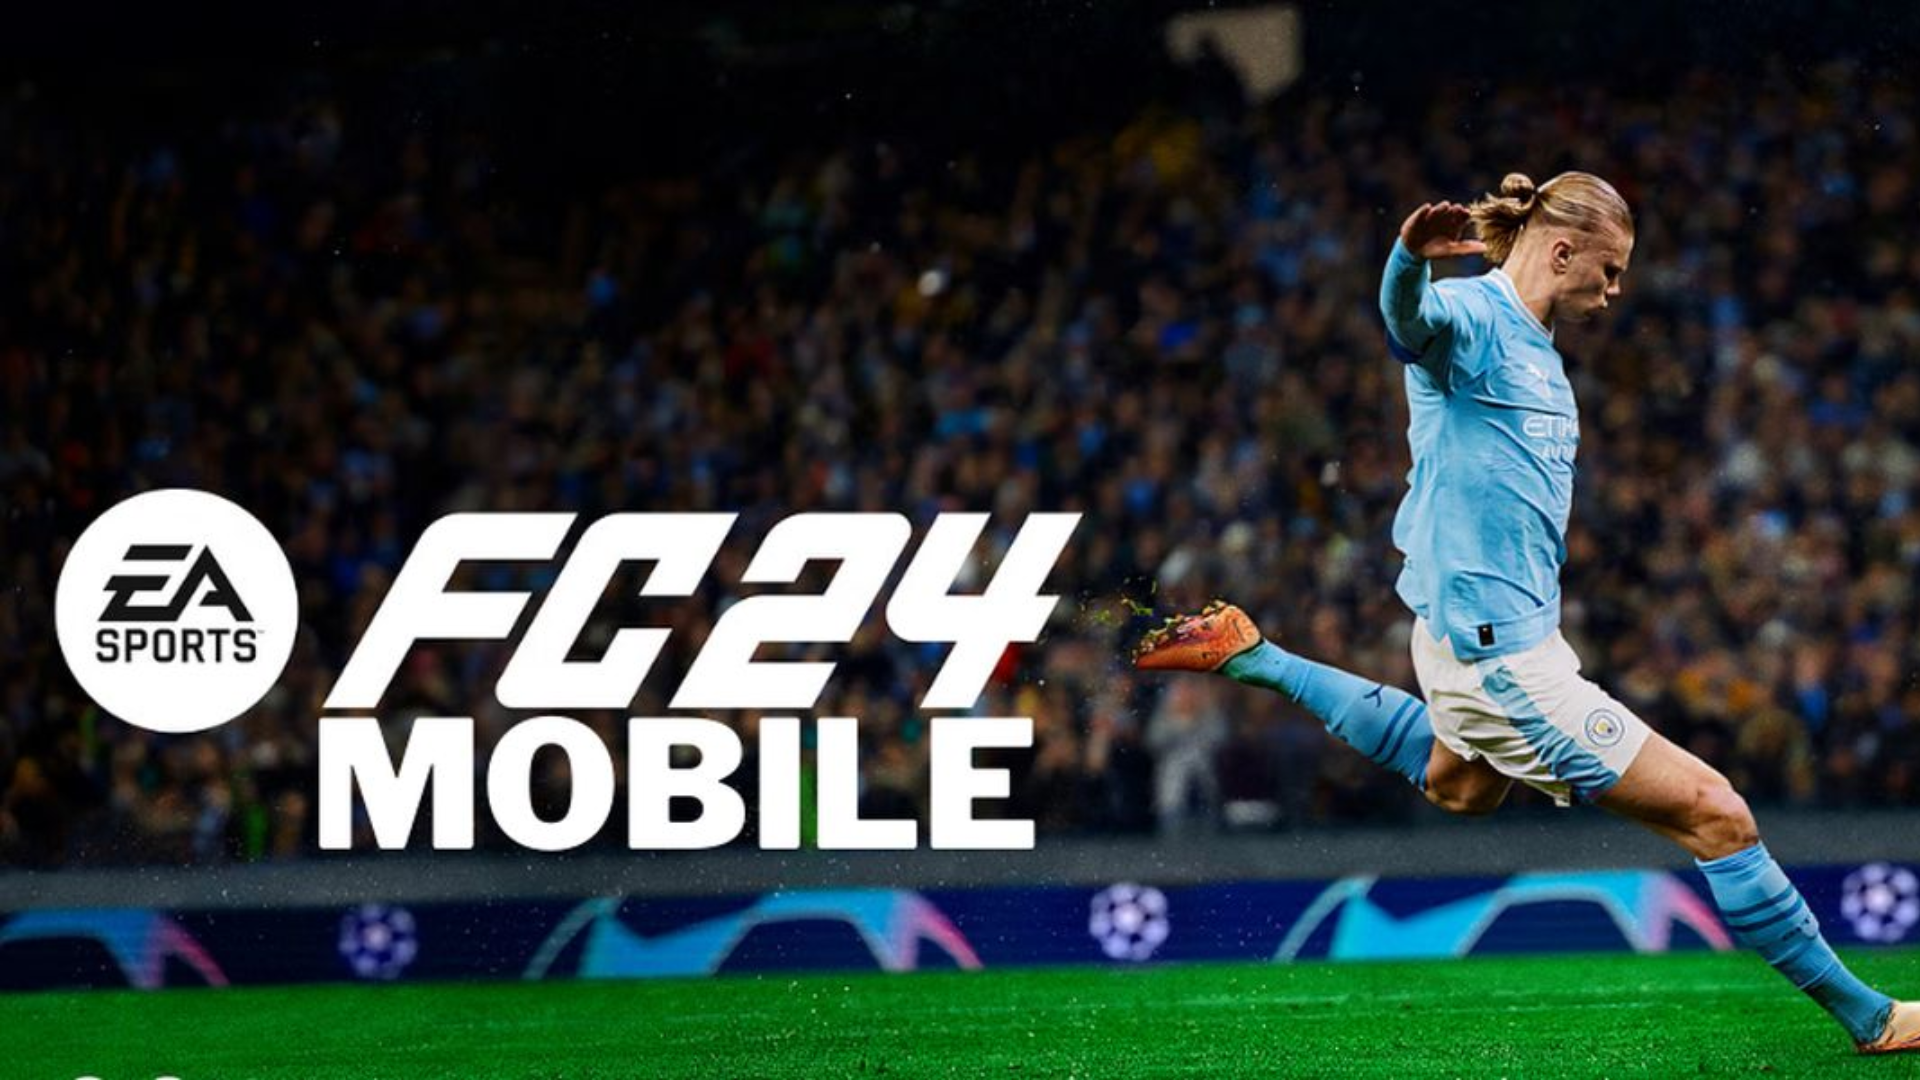 EA SPORTS FC™ Mobile - EA SPORTS Official Site